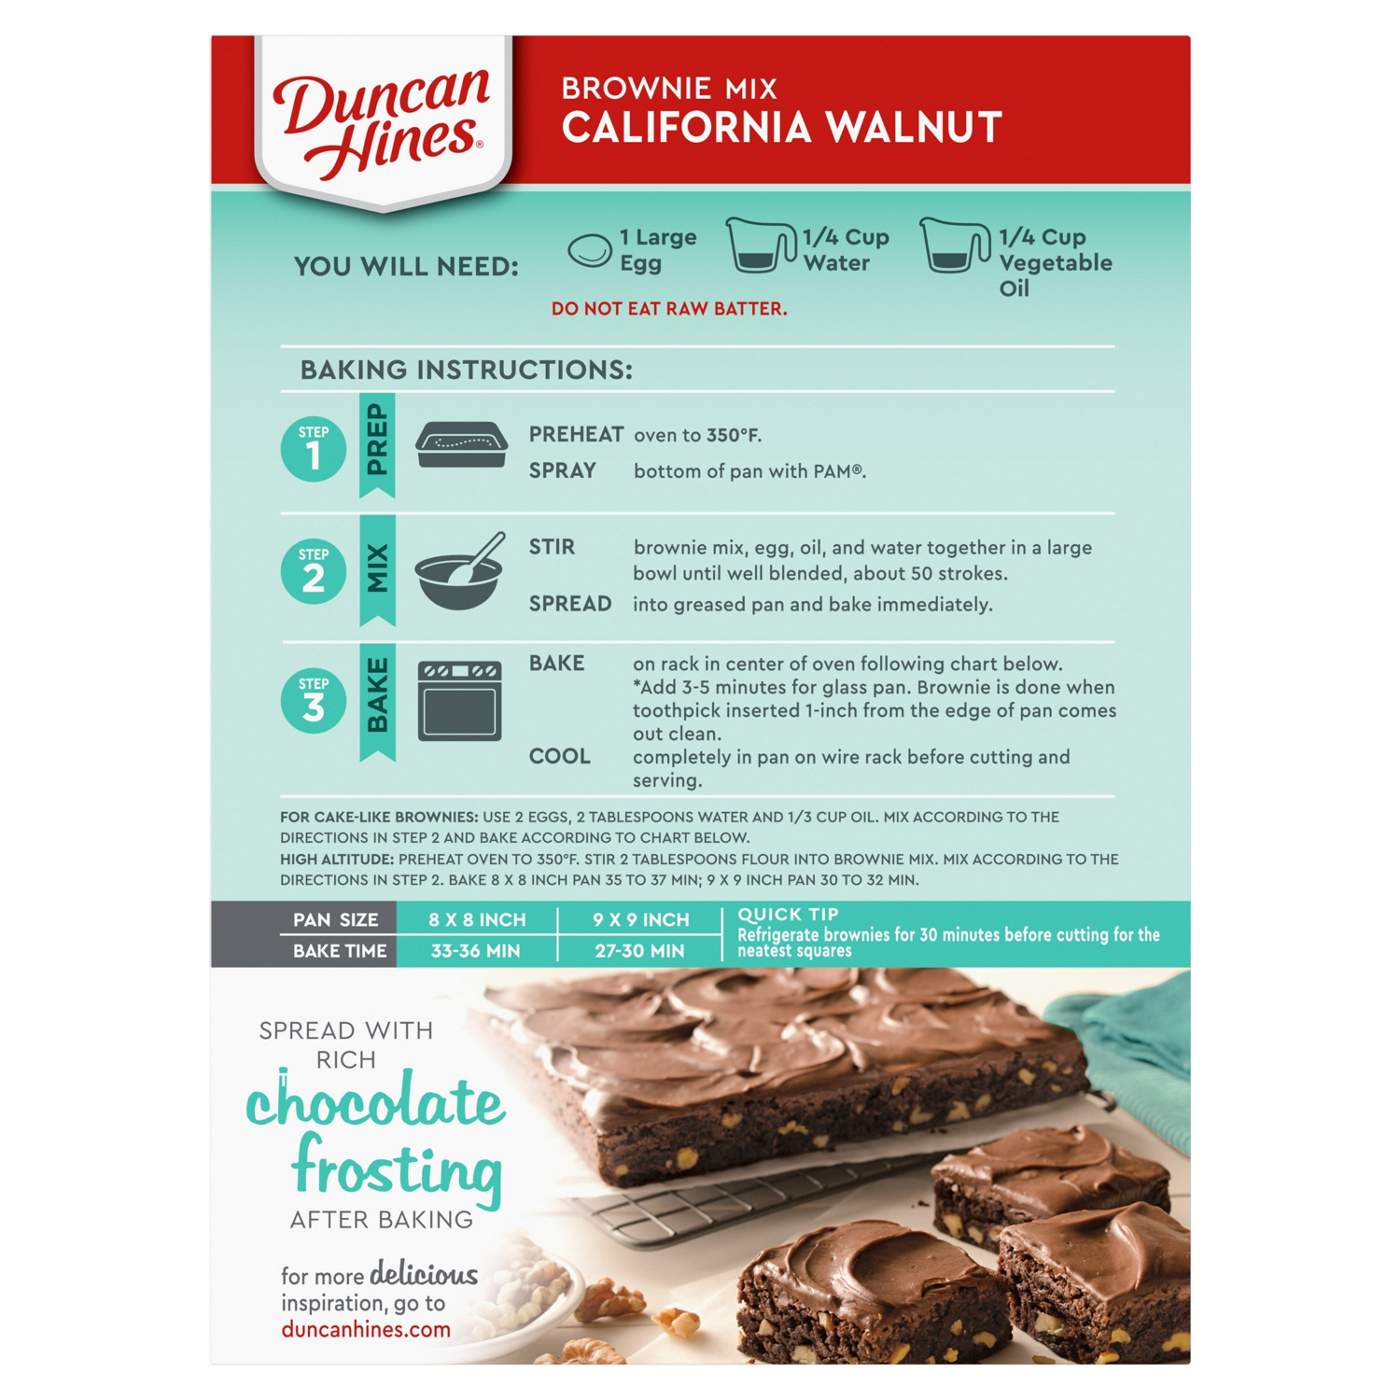 Duncan Hines Signature California Walnut Brownie Mix; image 4 of 7